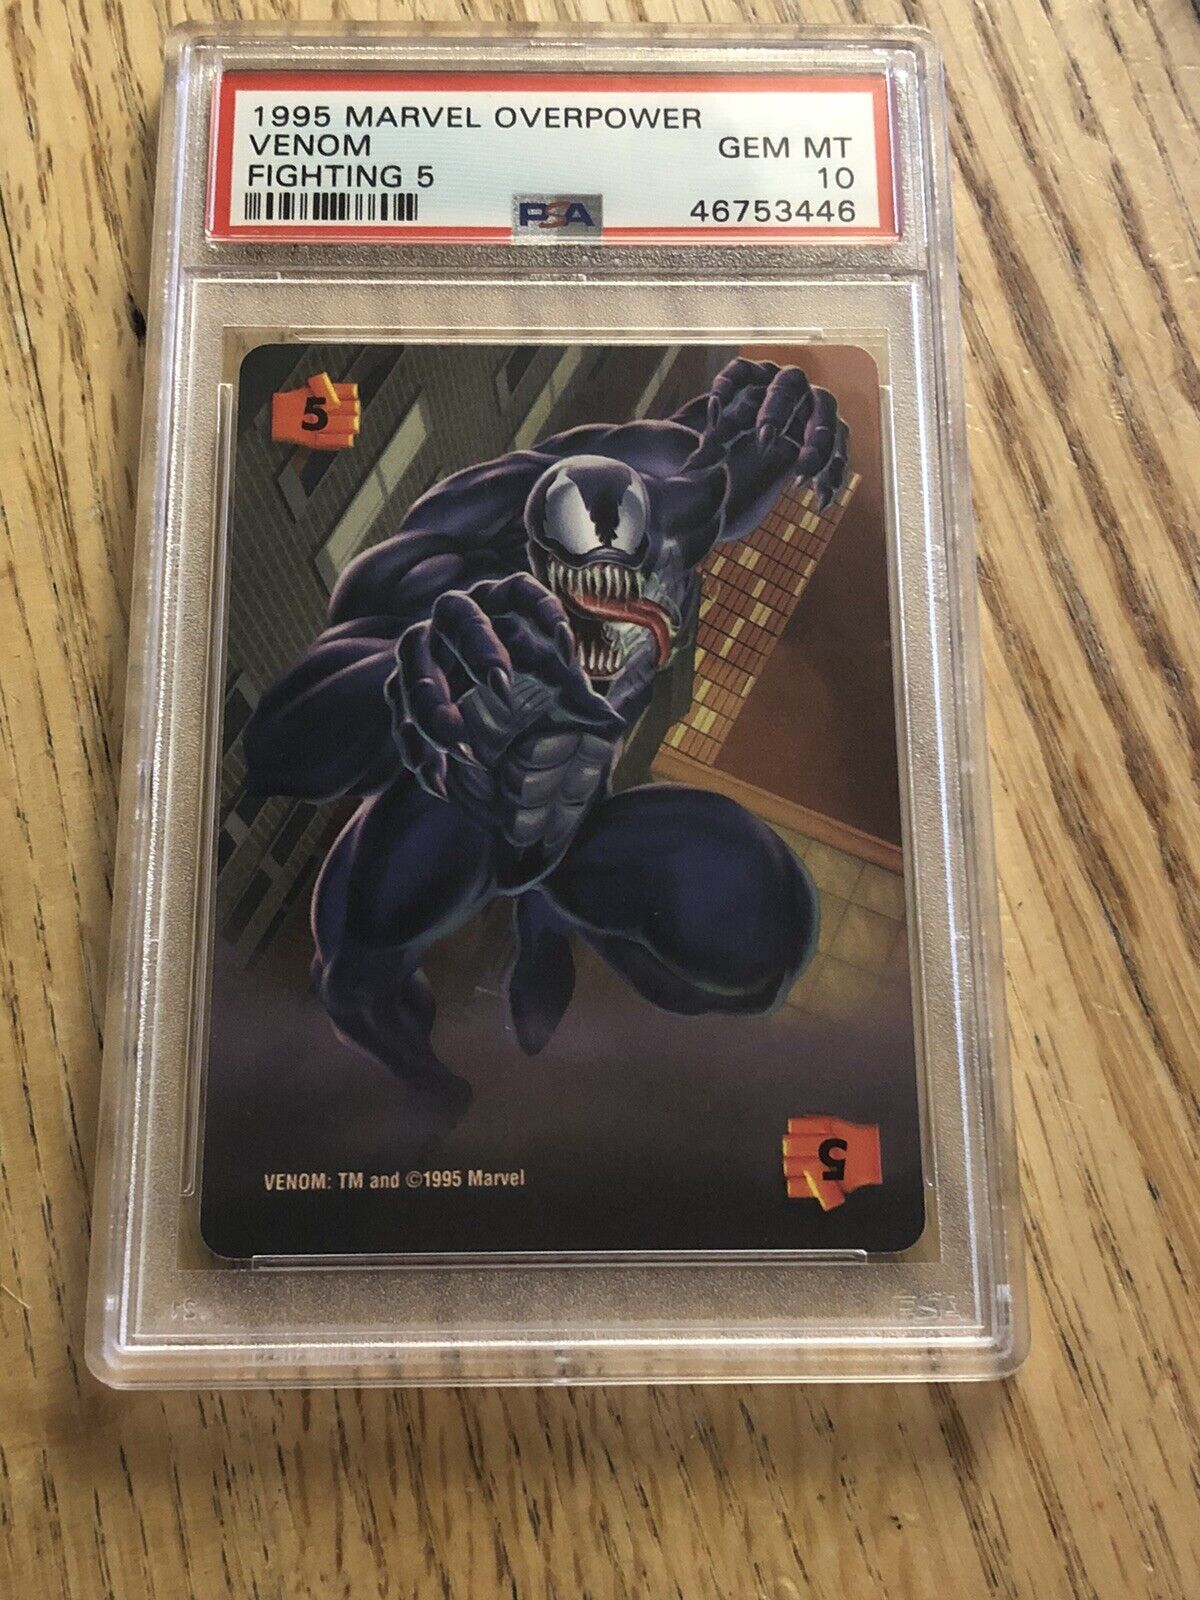 1995 Marvel Overpower Venom Fighting 5 PSA 10 GEM MINT